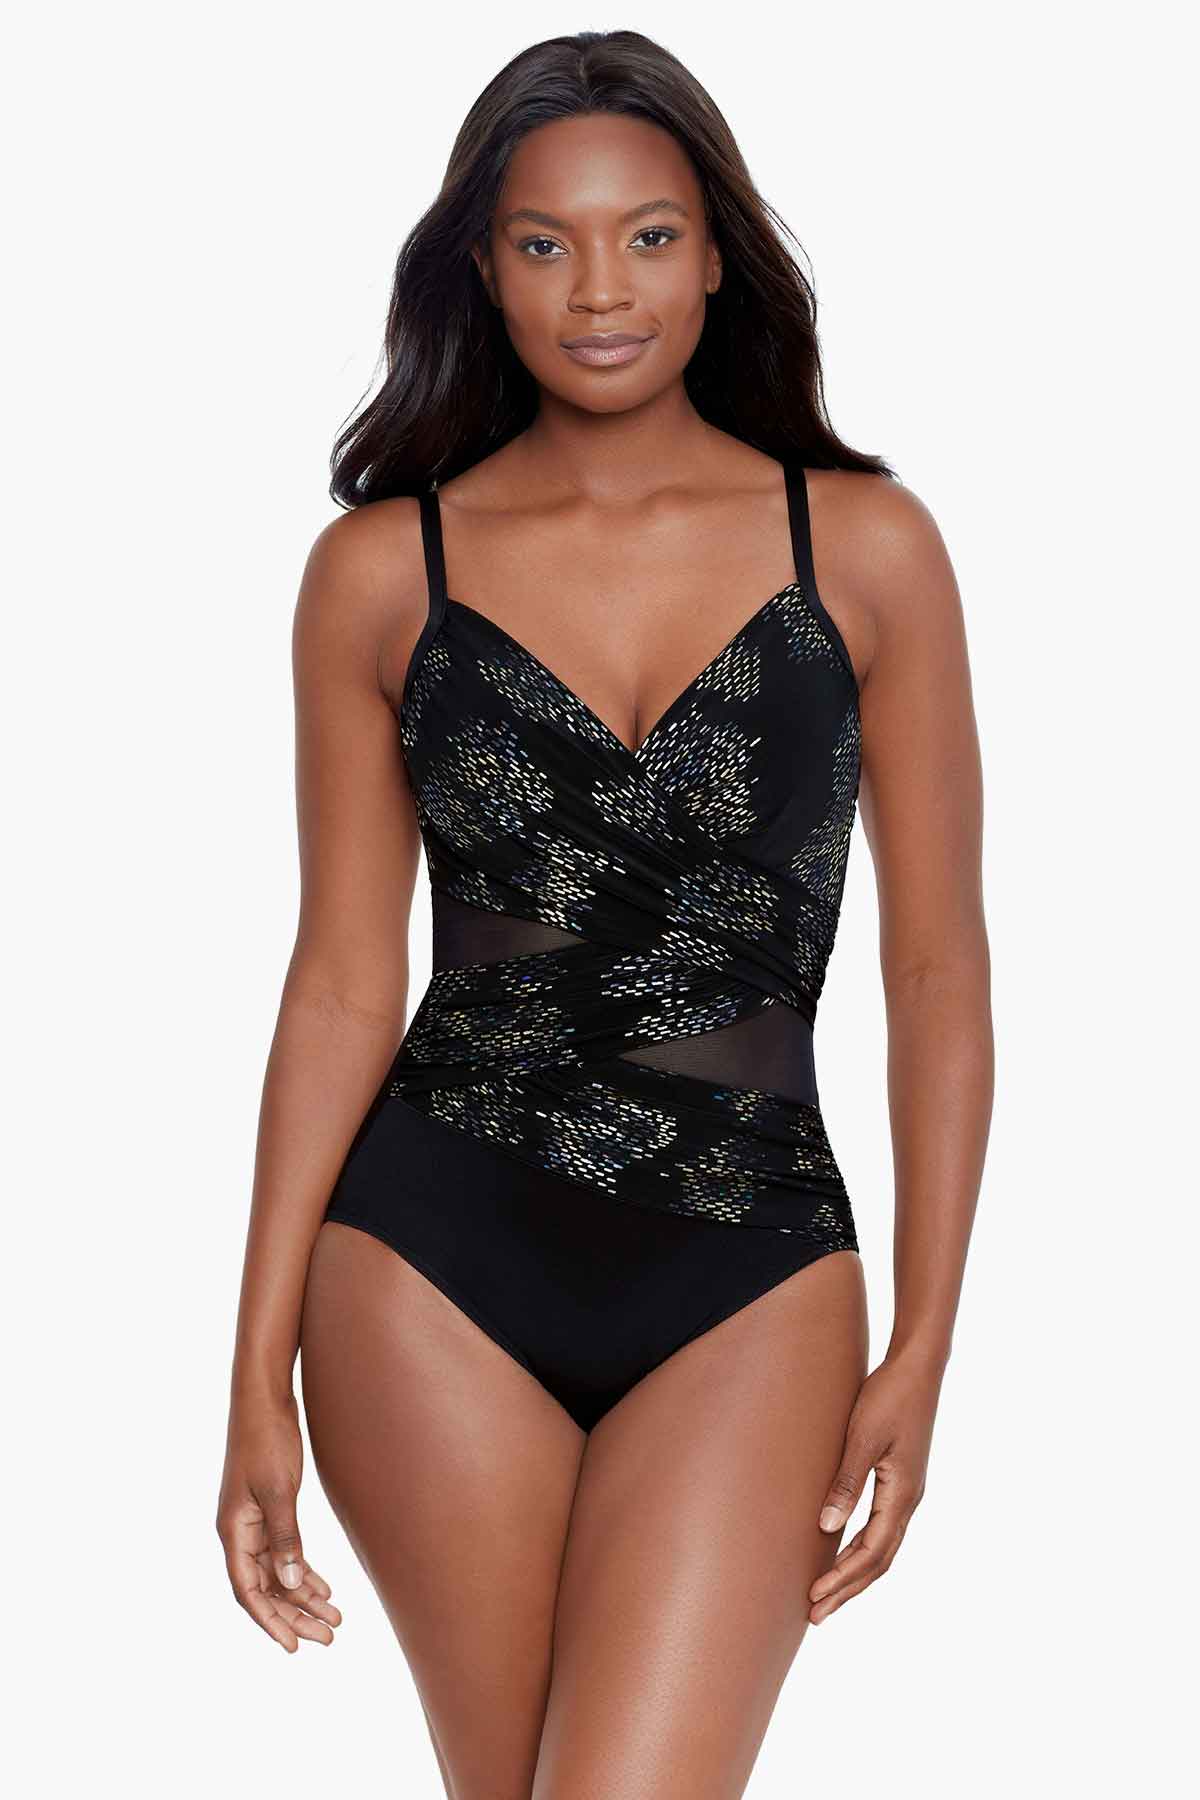 Black mesh swimsuit